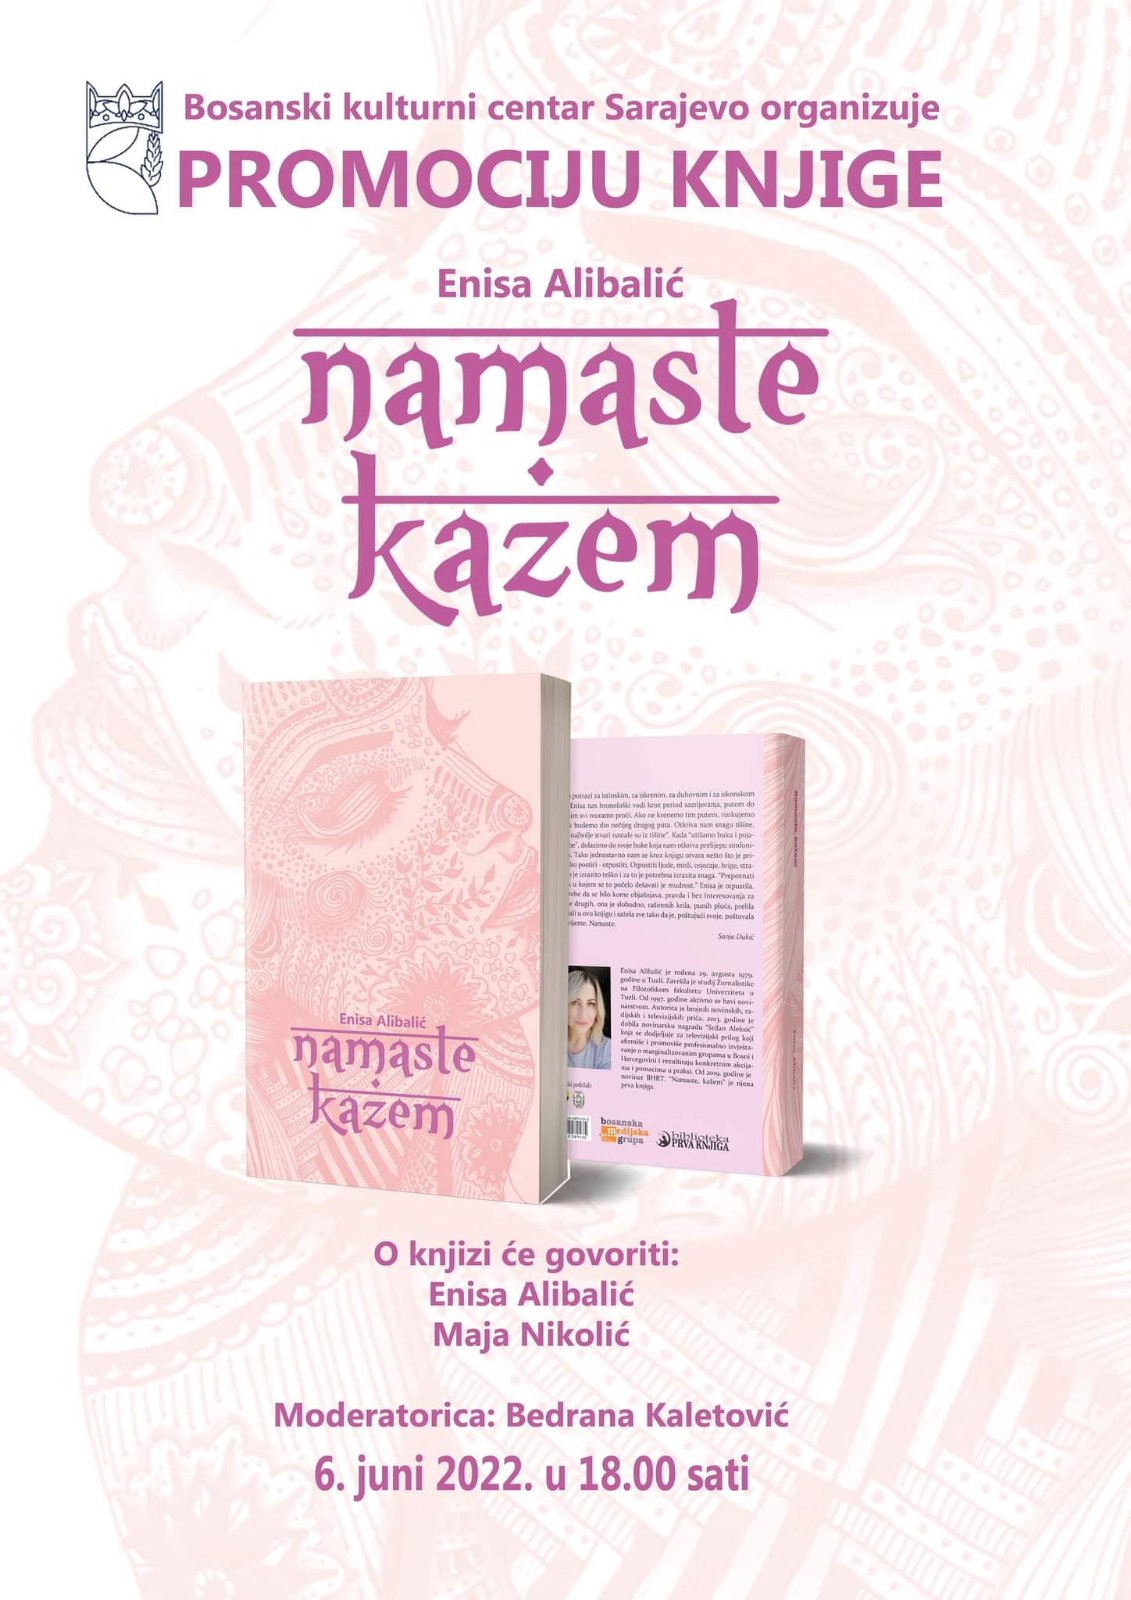 Promocija knjige „Namaste kažem“ autorice Enise Alibalić 06. 06. 2022.